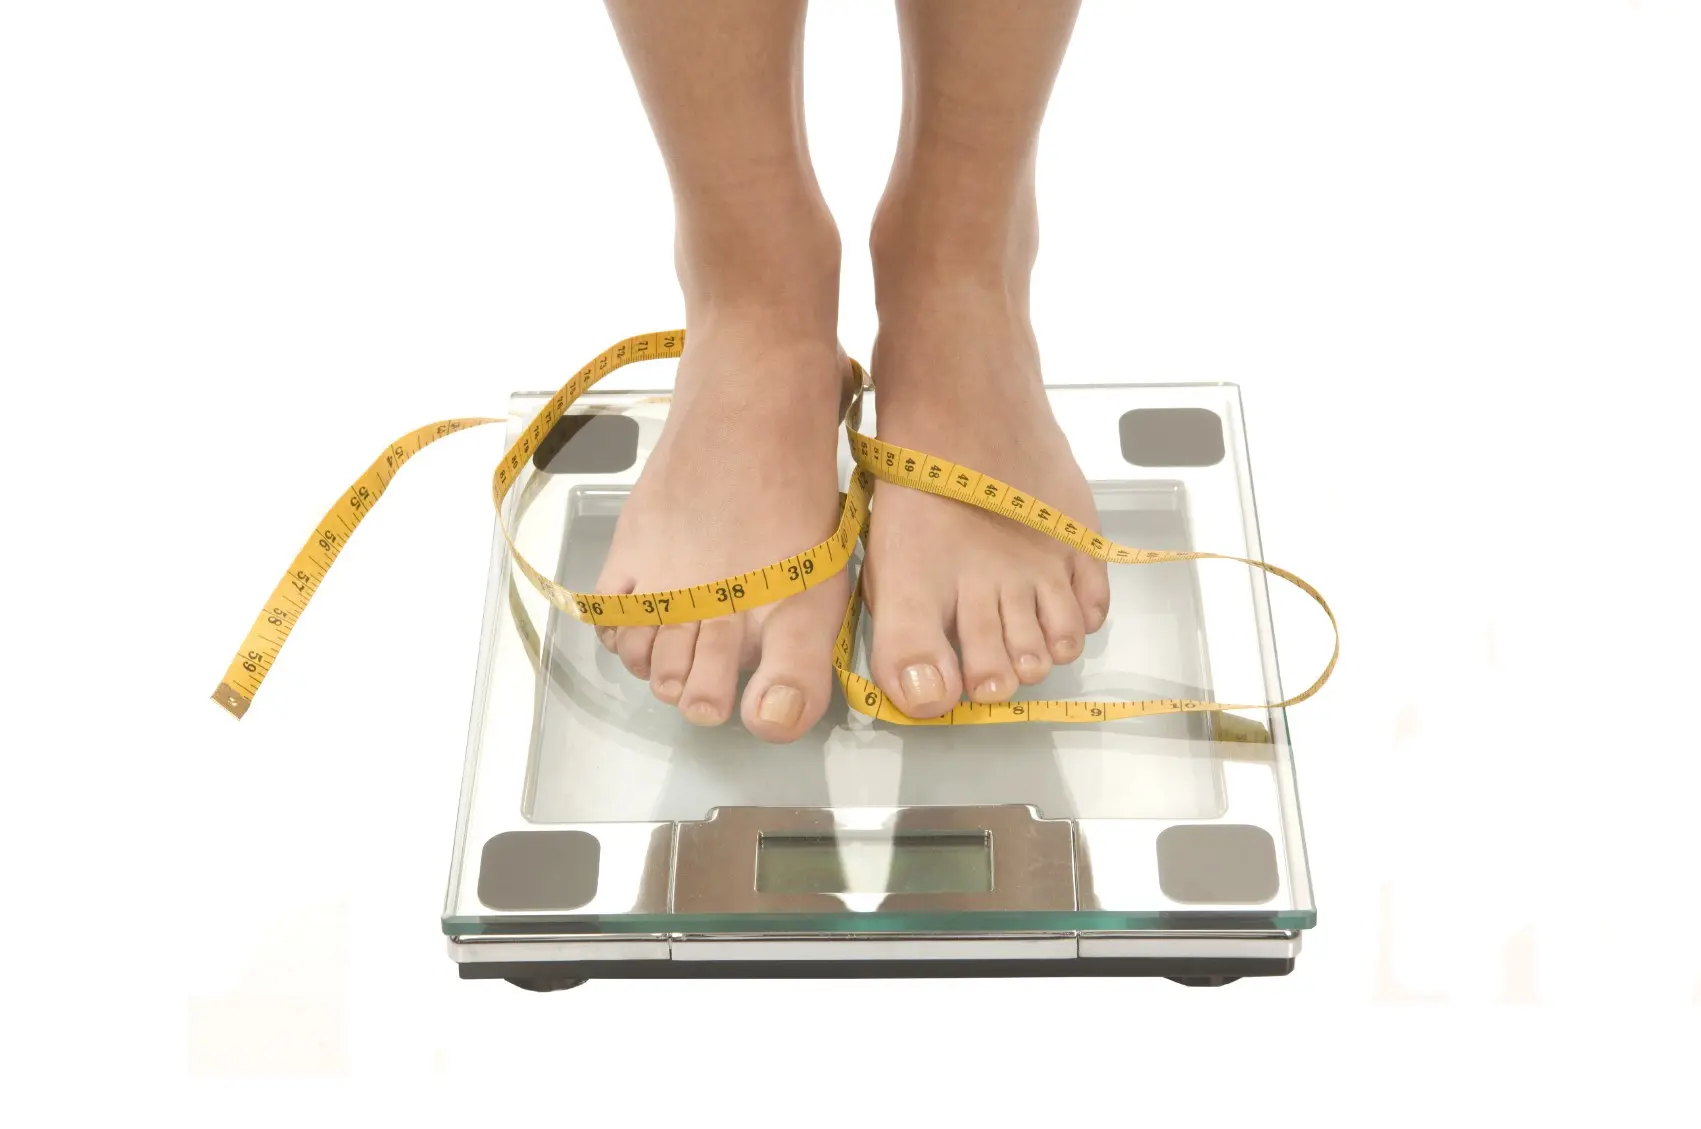 Menuju lebaran, jangan sampai berat badan malah jadi lebaran. ini 5 hal yang wajib dijalani saat diet! (Sumber Foto: pinimg.com)